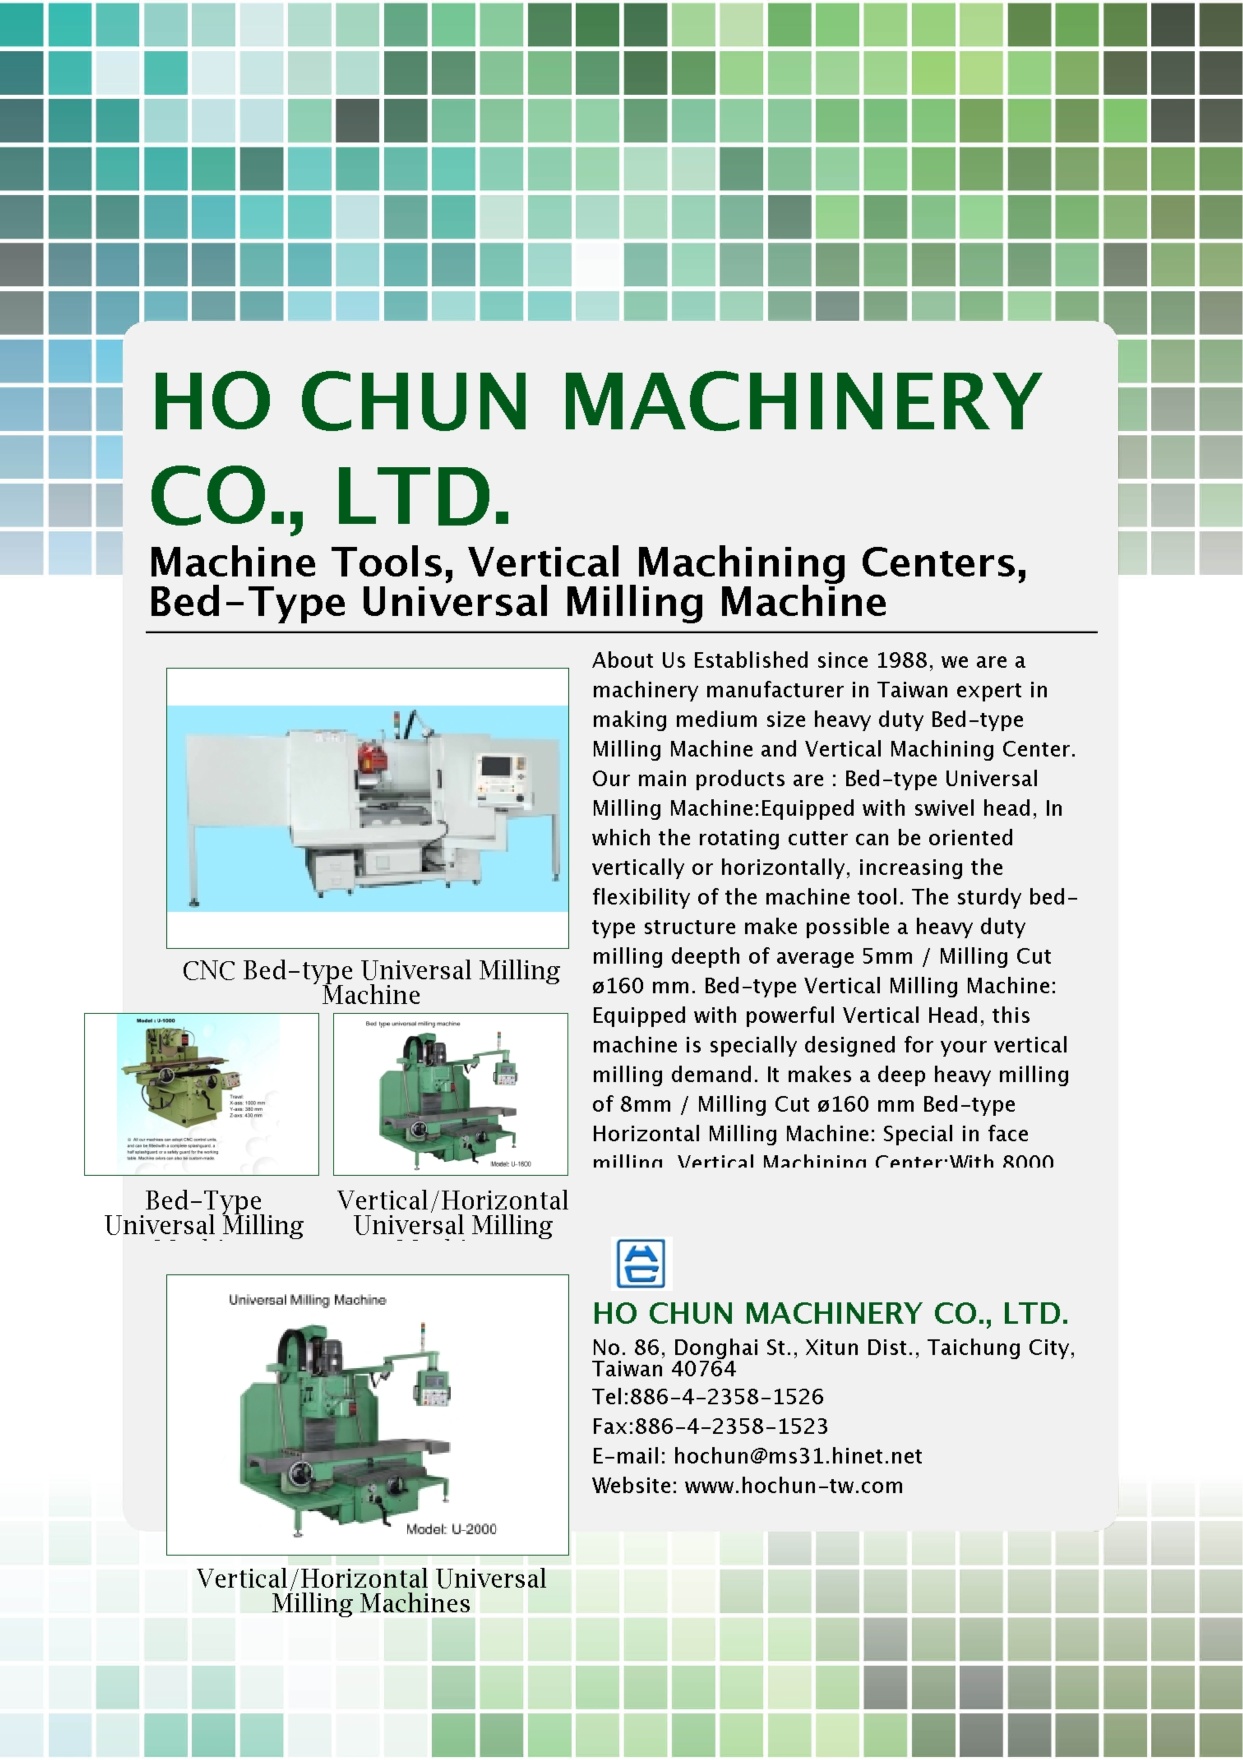 HO CHUN MACHINERY CO., LTD.